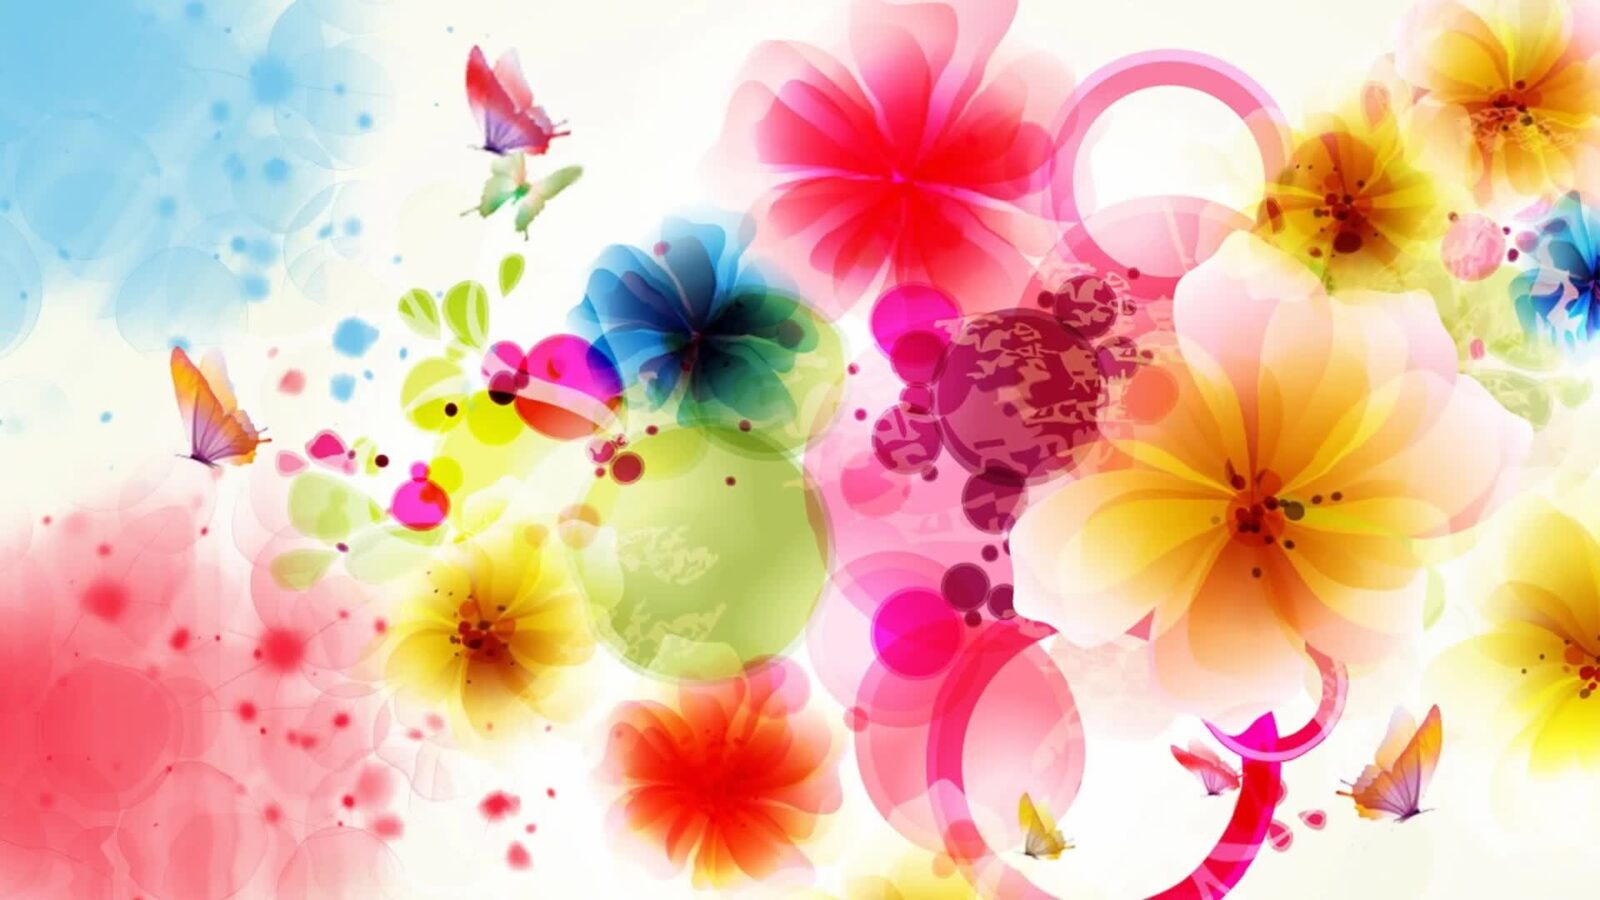 LiveWallpapers4Free.com | Flowers And Butterflies - Abstract Desktop Wallpaper